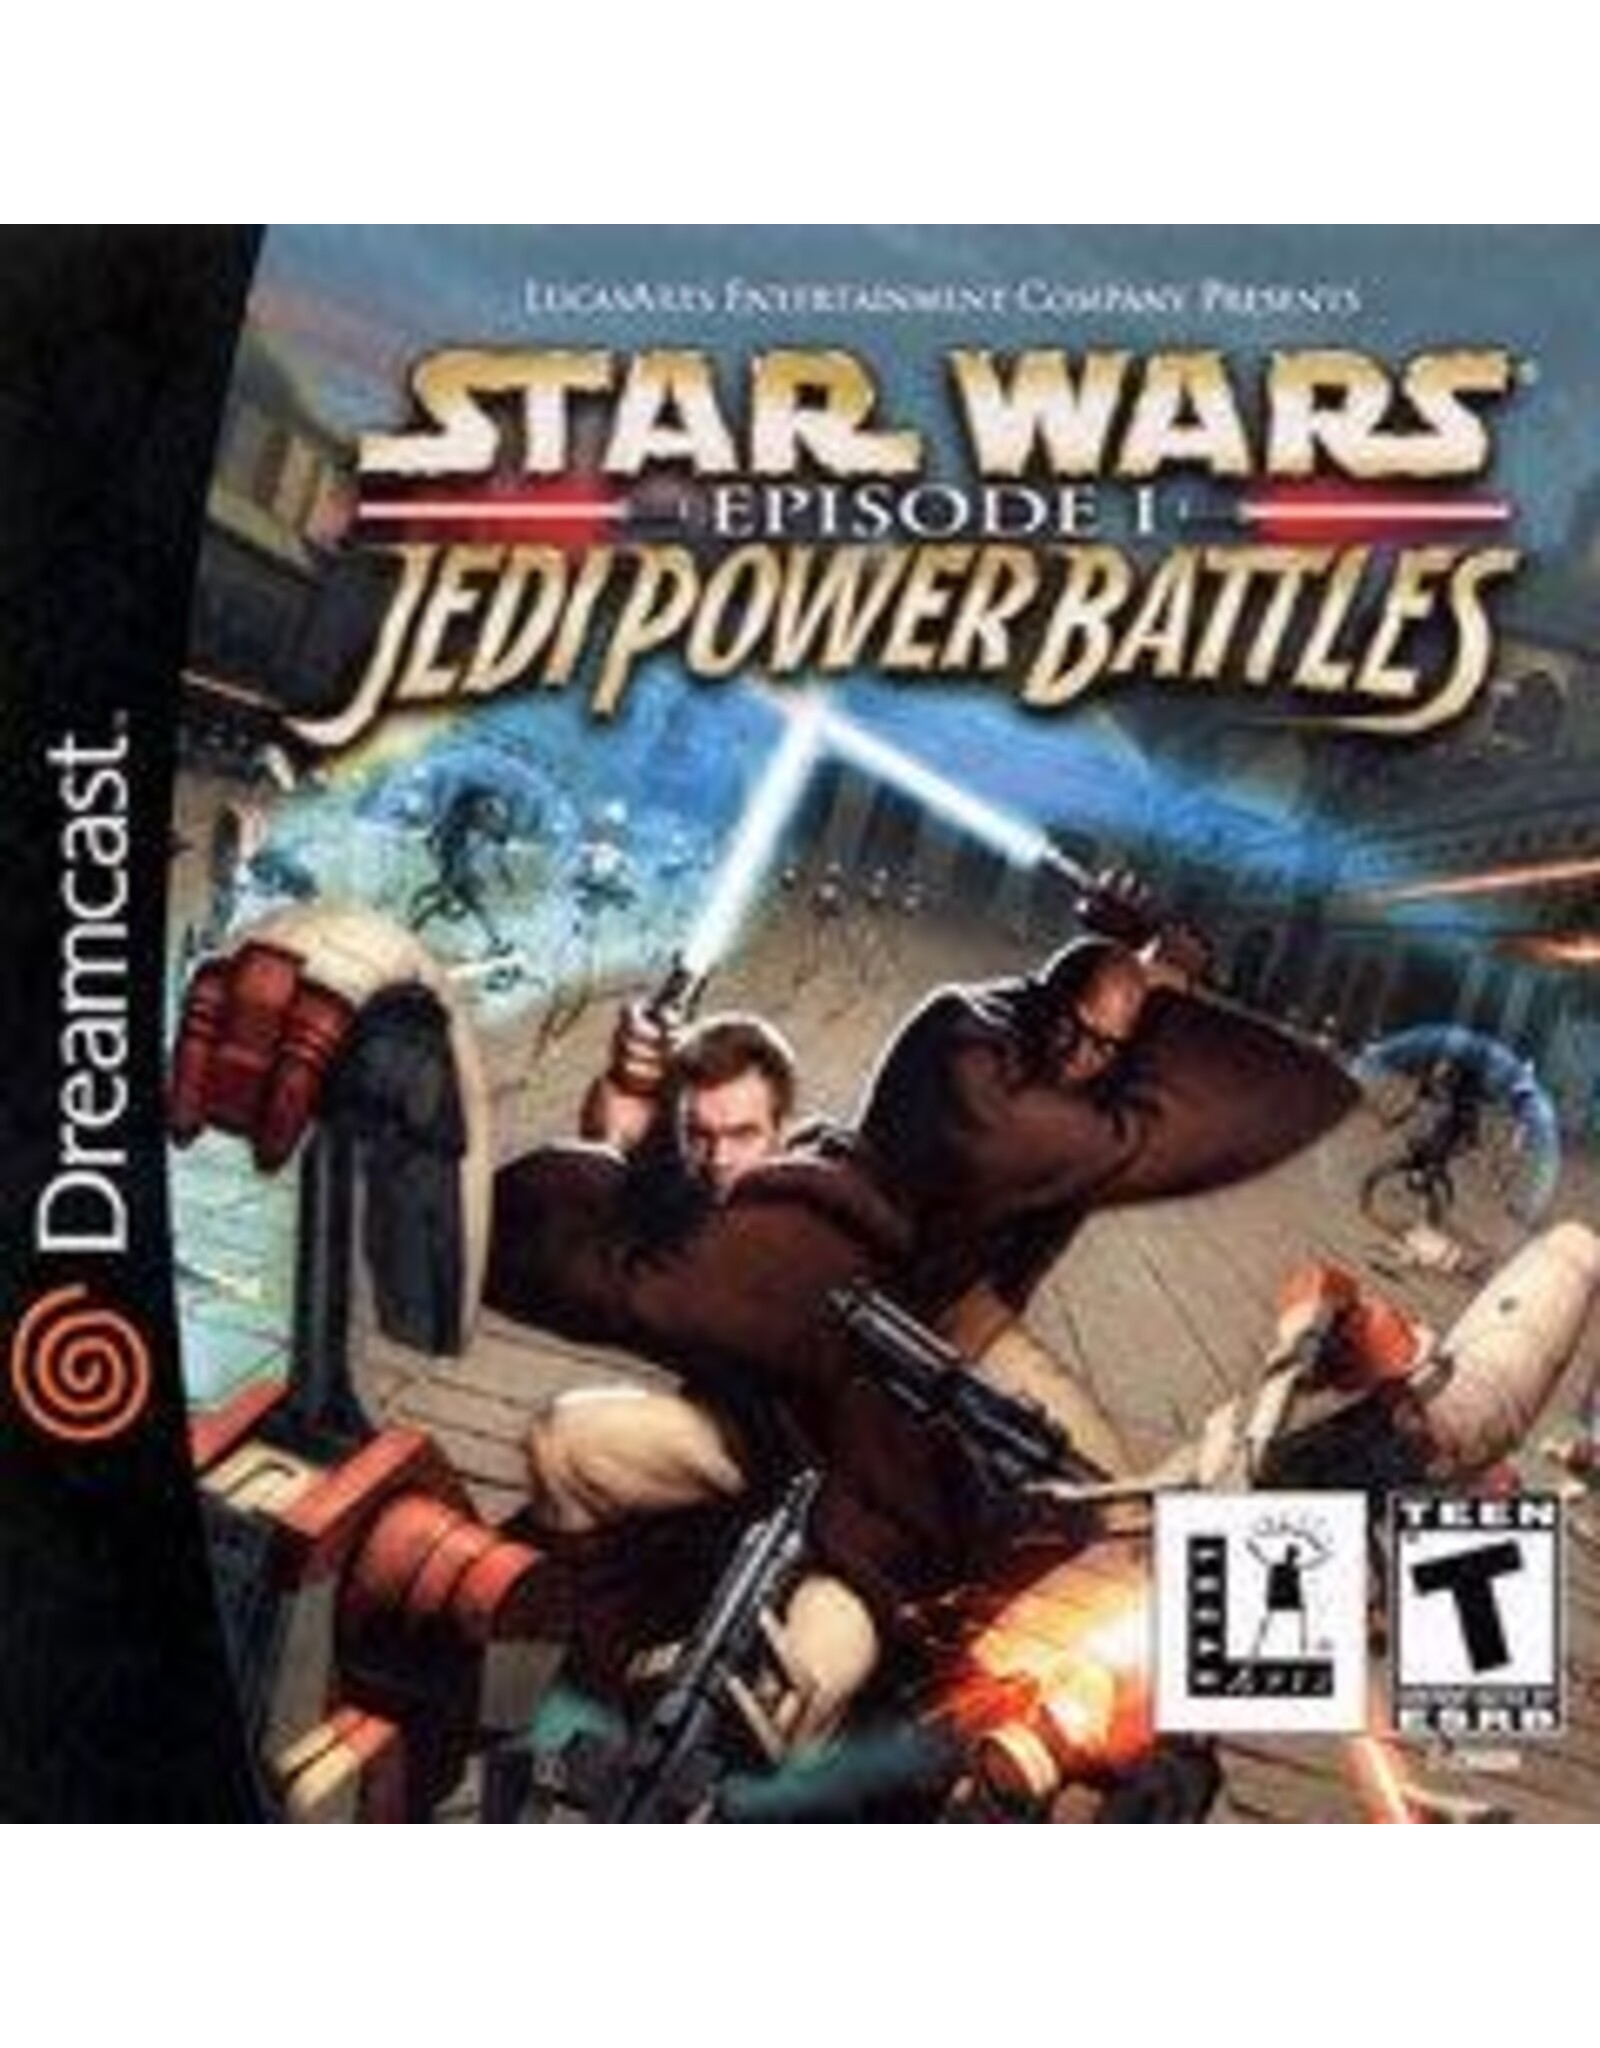 Sega Dreamcast Star Wars Episode I Jedi Power Battles (Brand New, Canadian Version w/ French Manual)